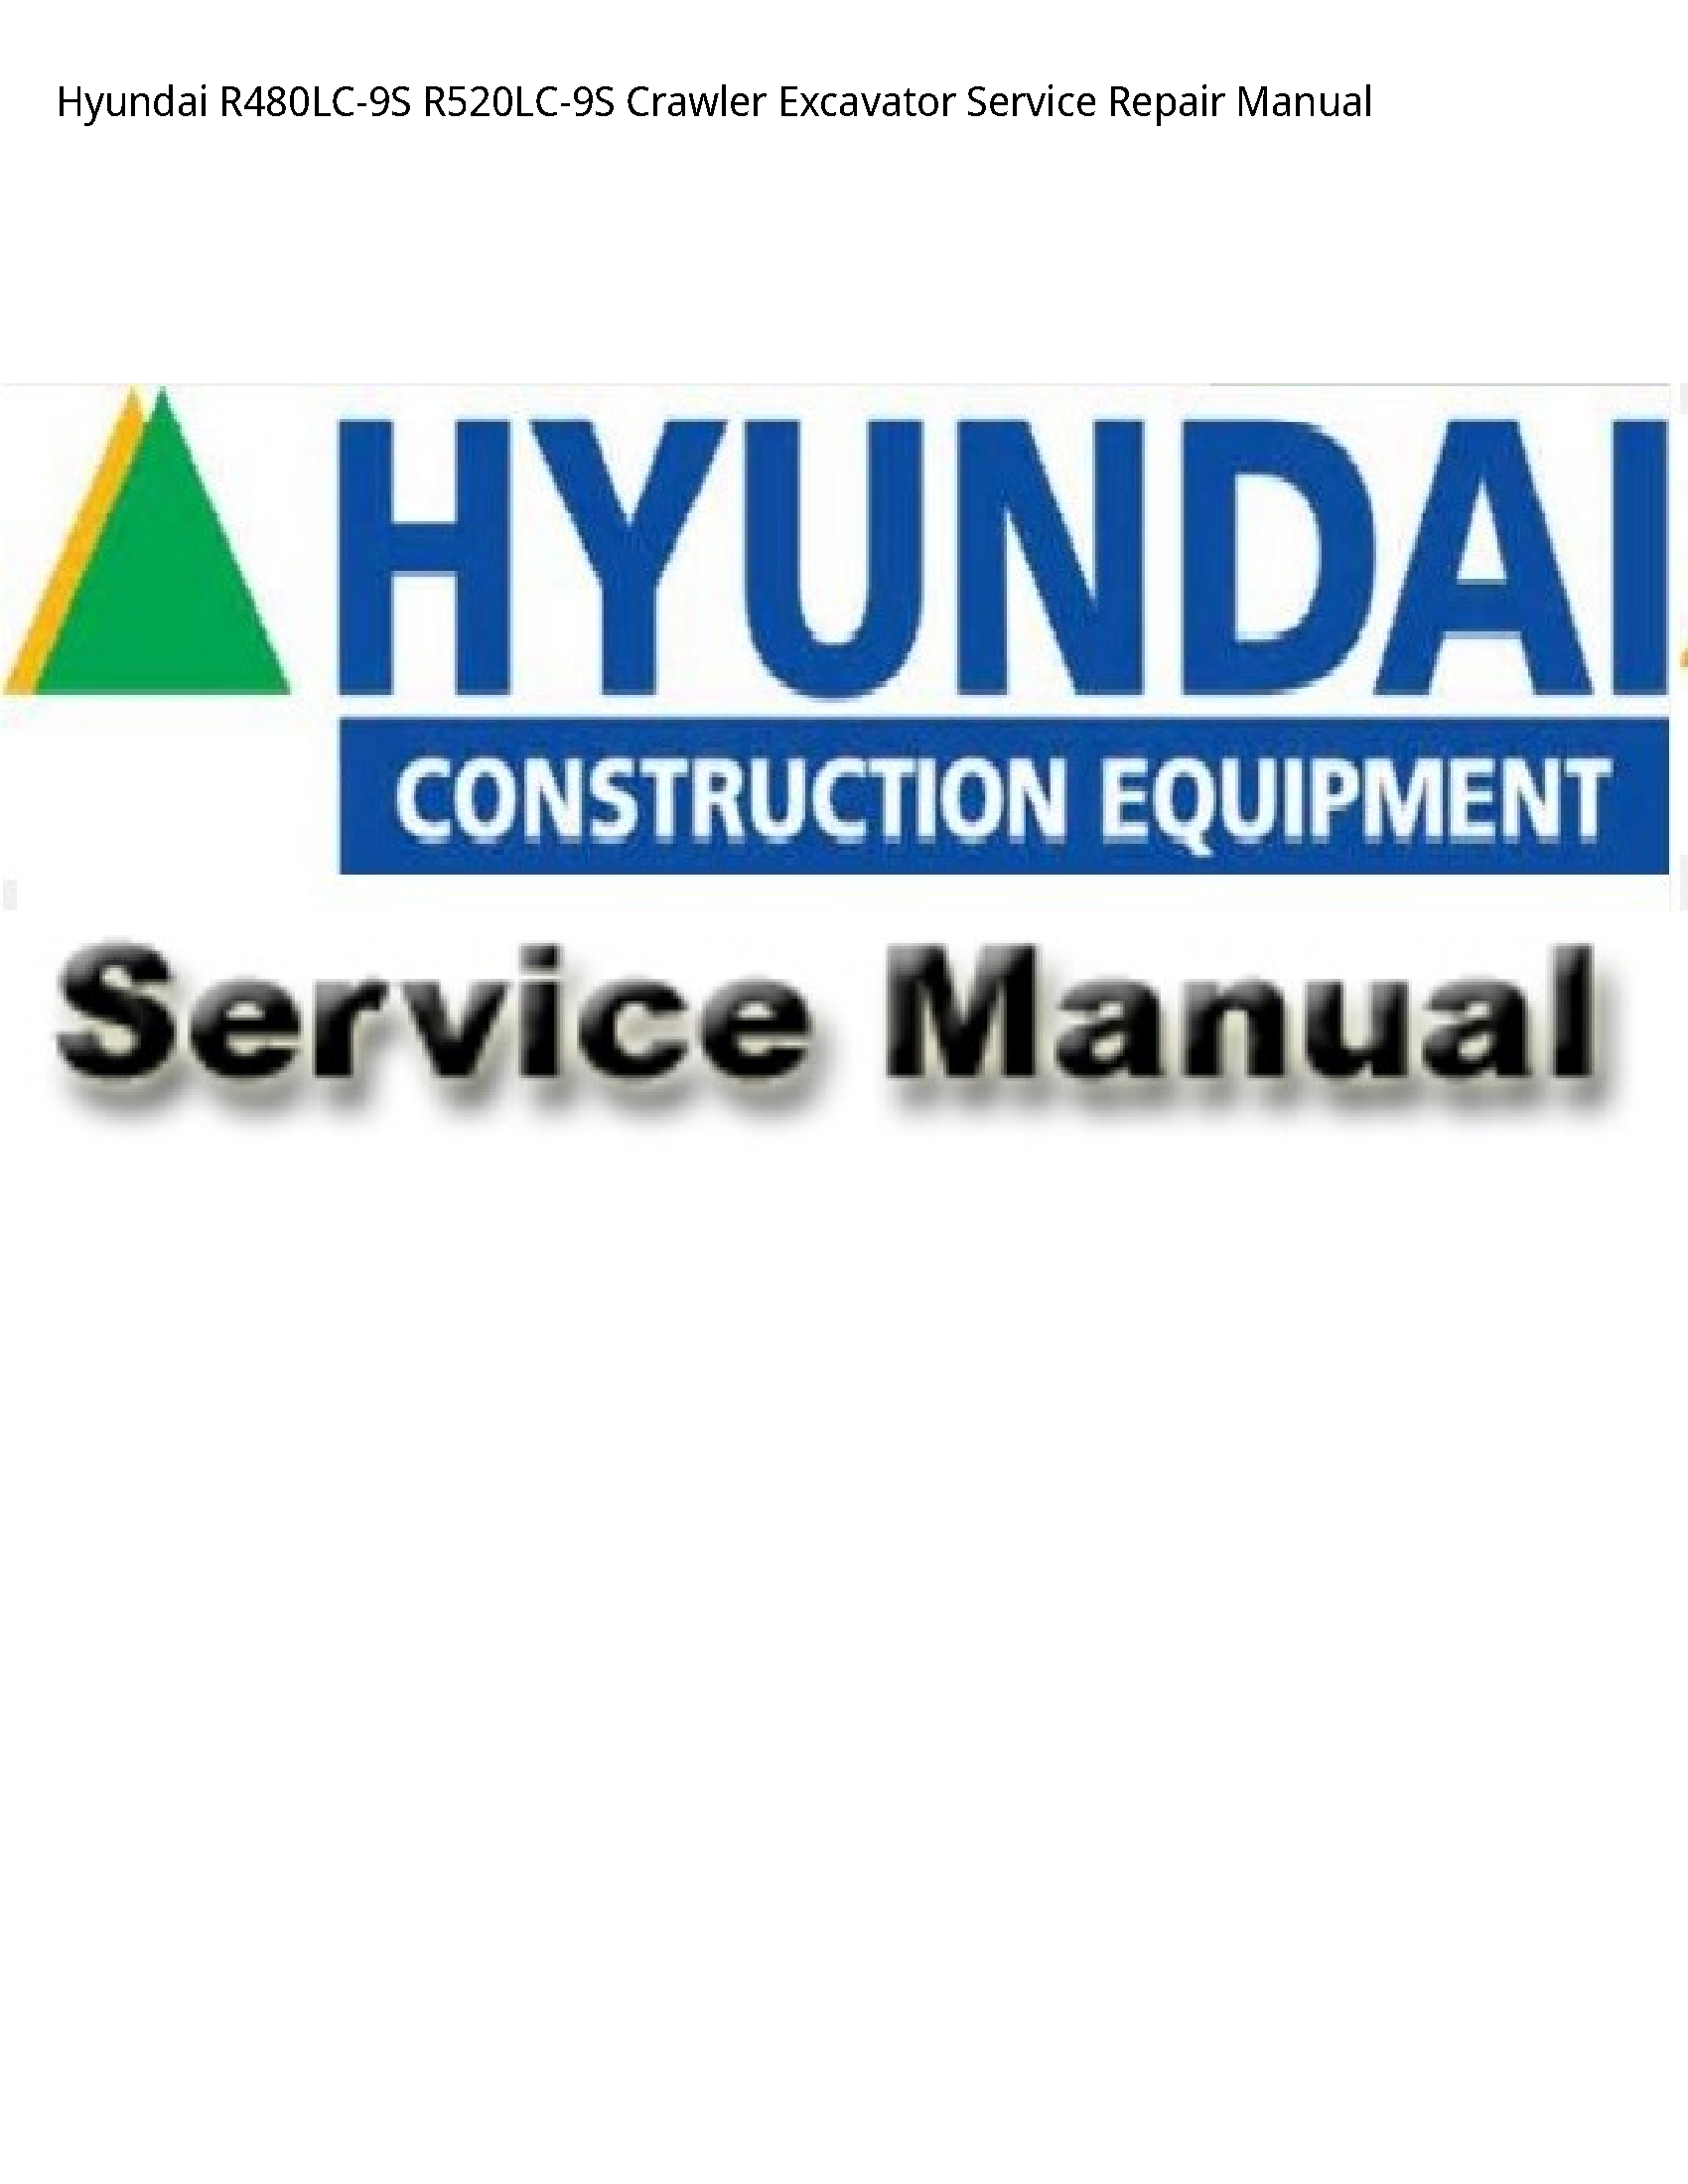 Hyundai R480LC-9S Crawler Excavator manual